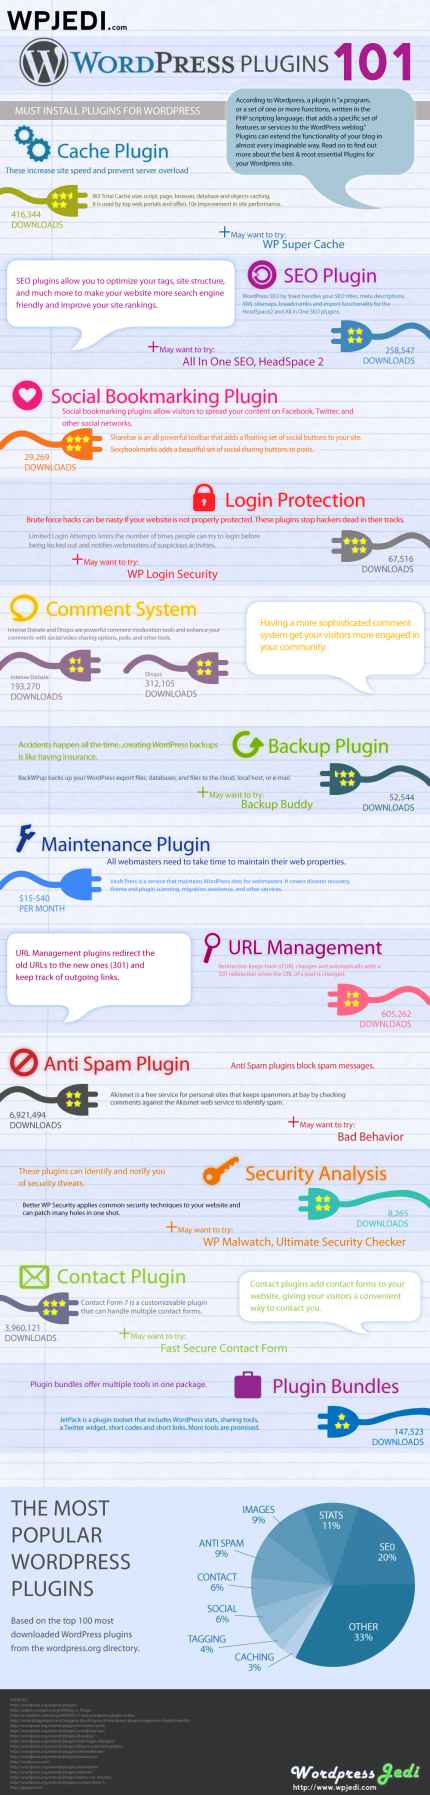 infografia mejores plugins de wordpress